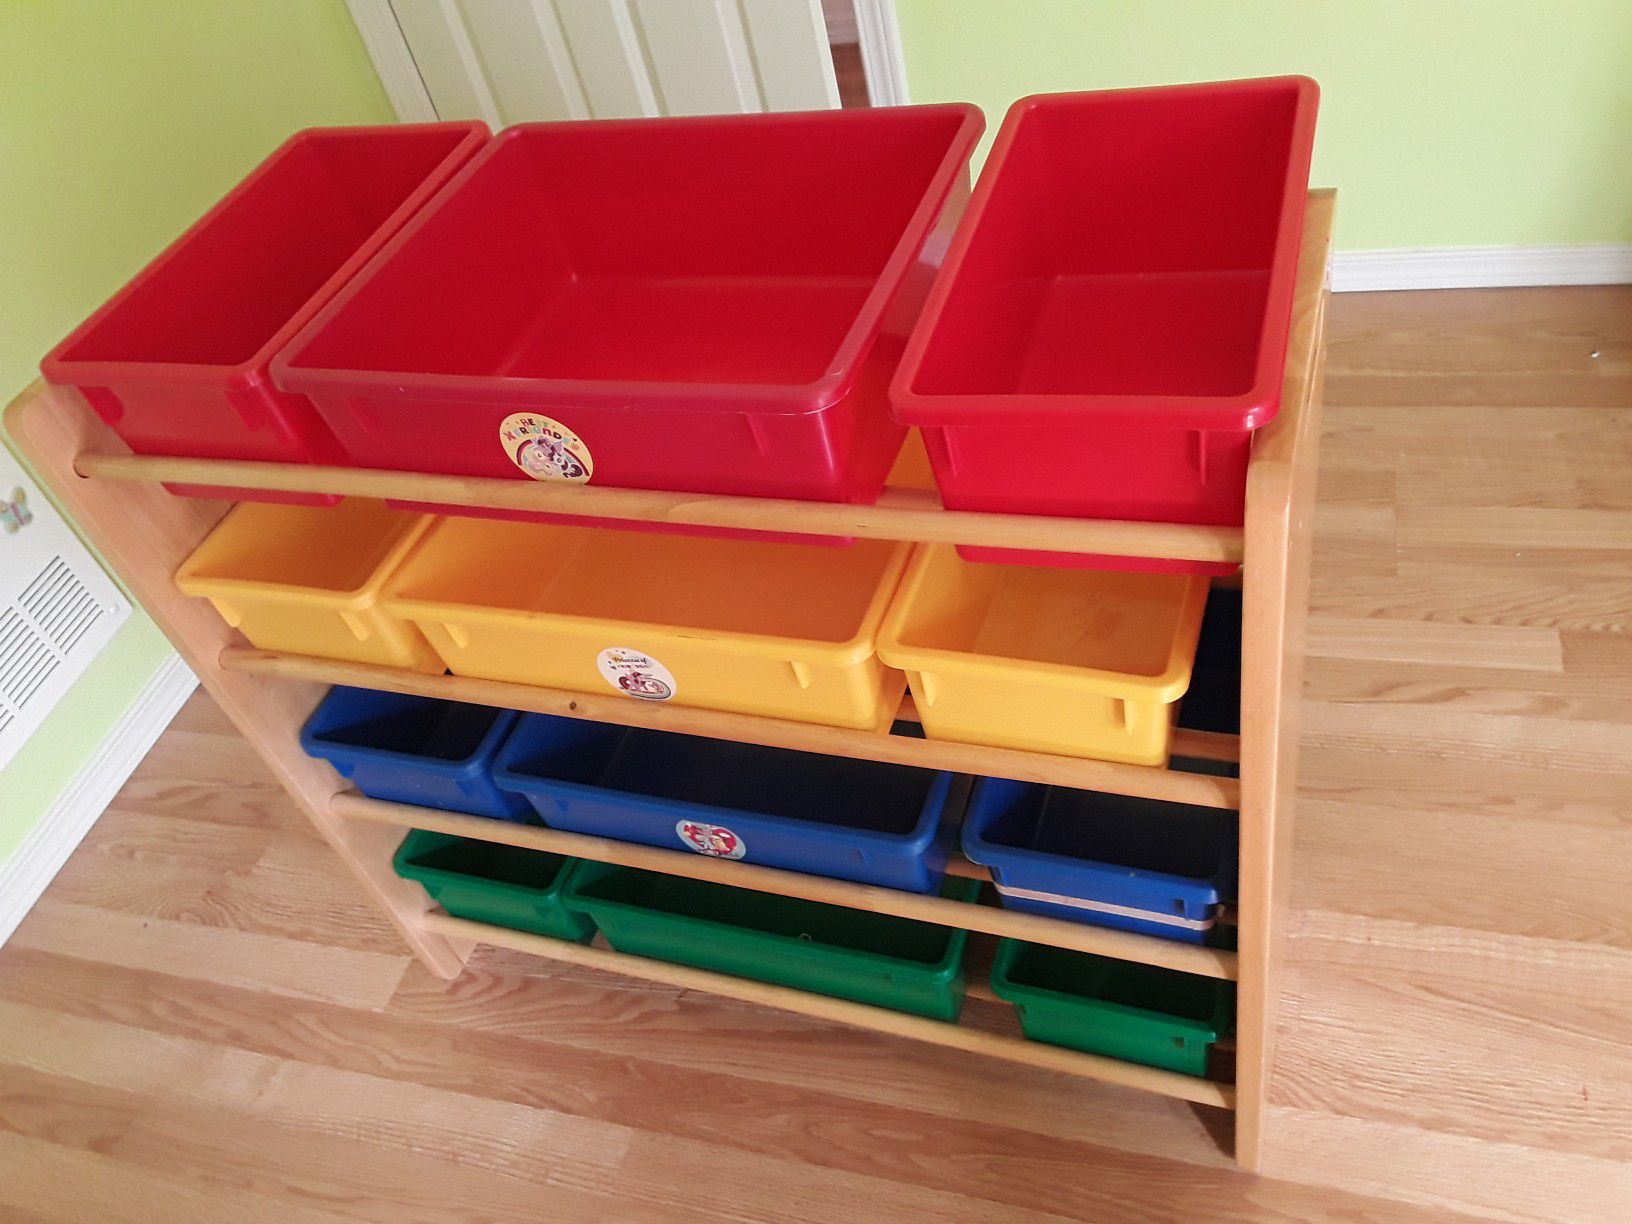 Kids toy organizer/ storage